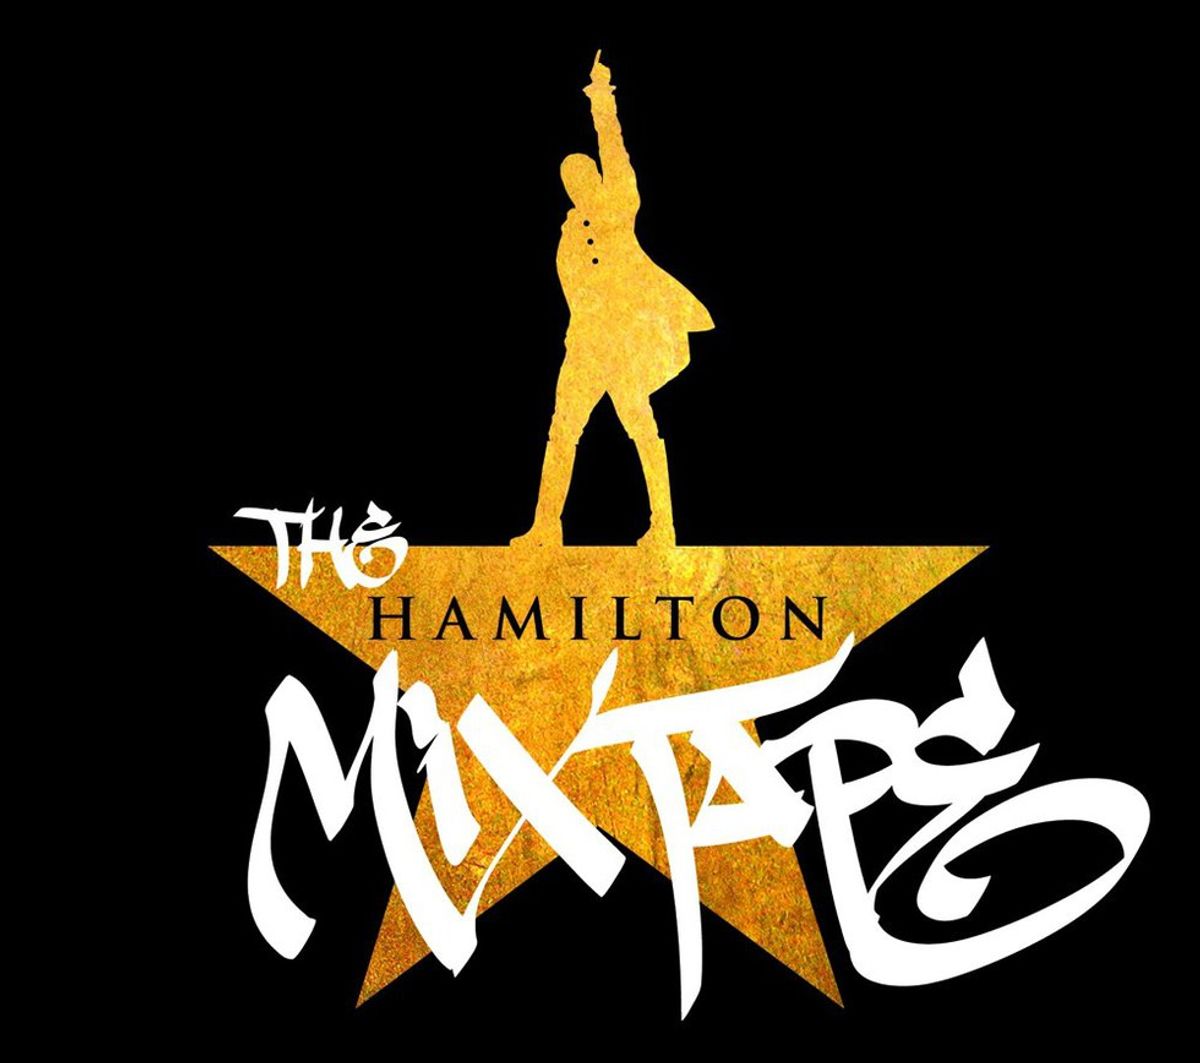 Top 5 Songs From The Hamilton Mixtape